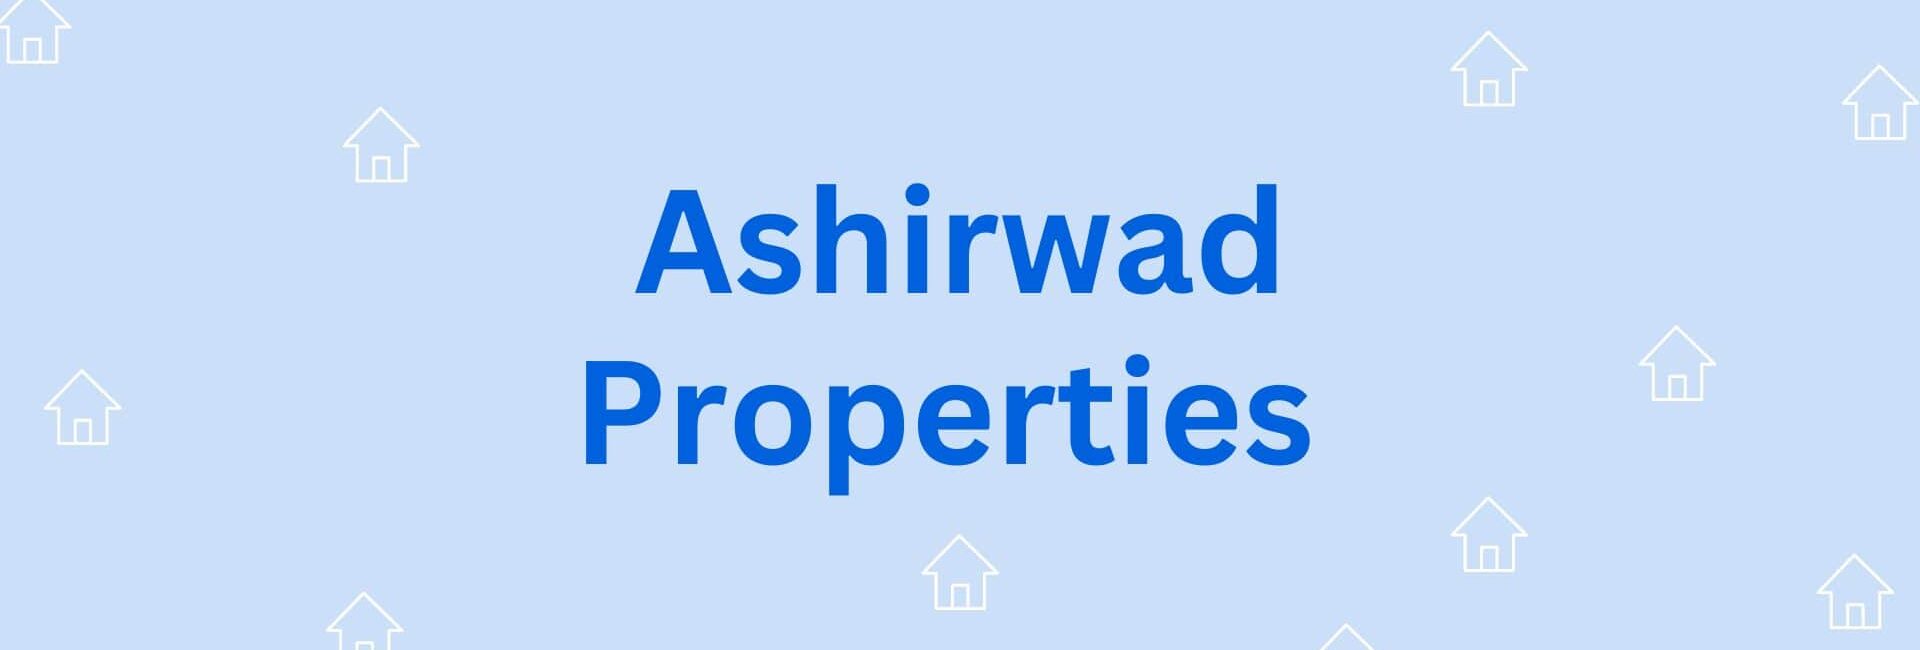 Ashirwad Properties - real estate agent in Hisar